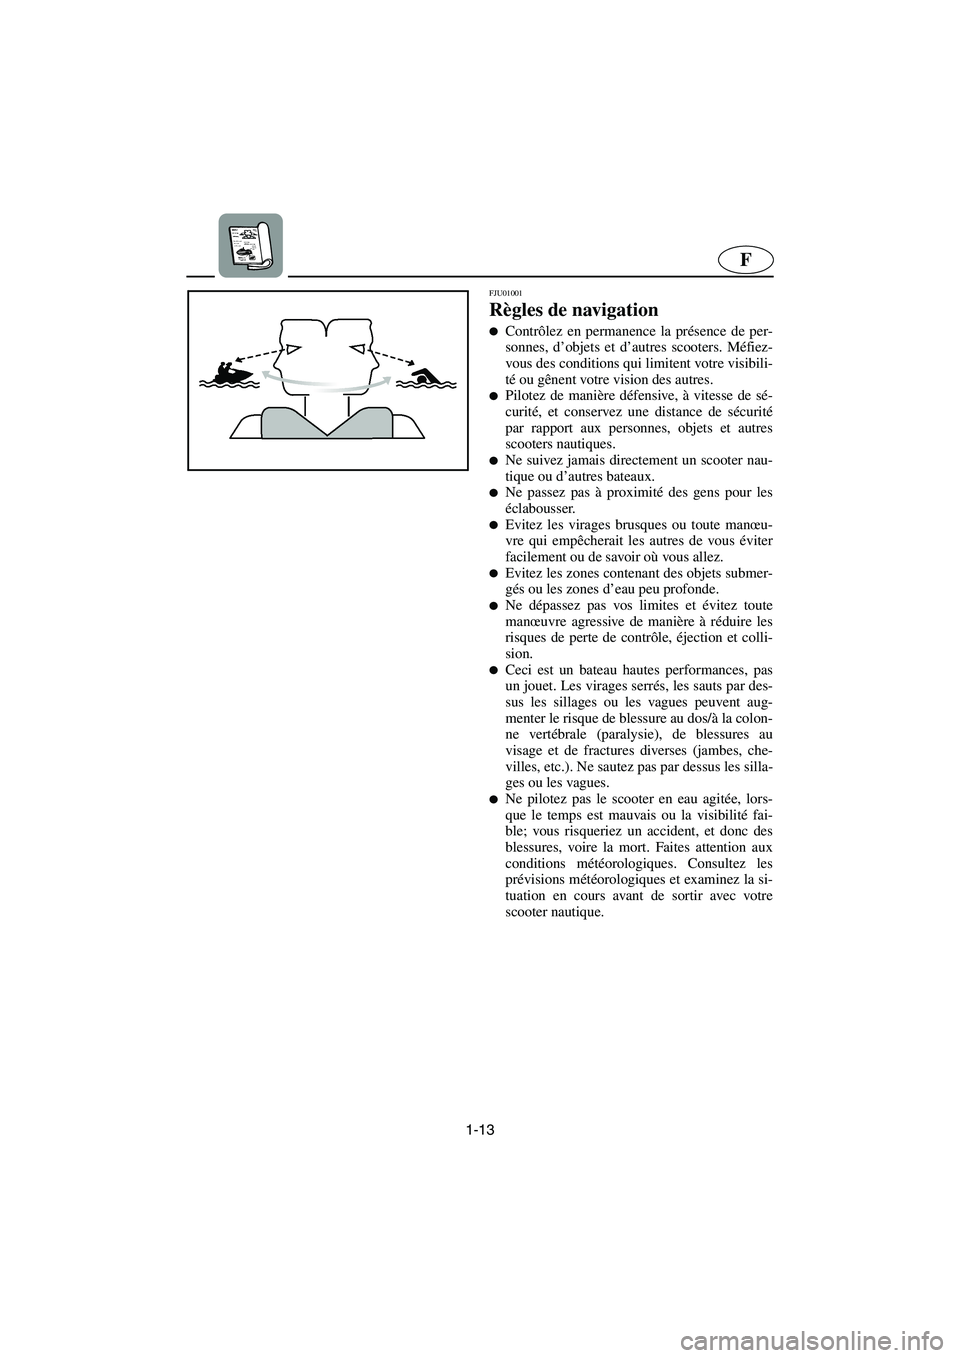 YAMAHA GP800R 2003  Manuale de Empleo (in Spanish) 1-13
F
FJU01001 
Règles de navigation  
Contrôlez en permanence la présence de per-
sonnes, d’objets et d’autres scooters. Méfiez-
vous des conditions qui limitent votre visibili-
té ou gên